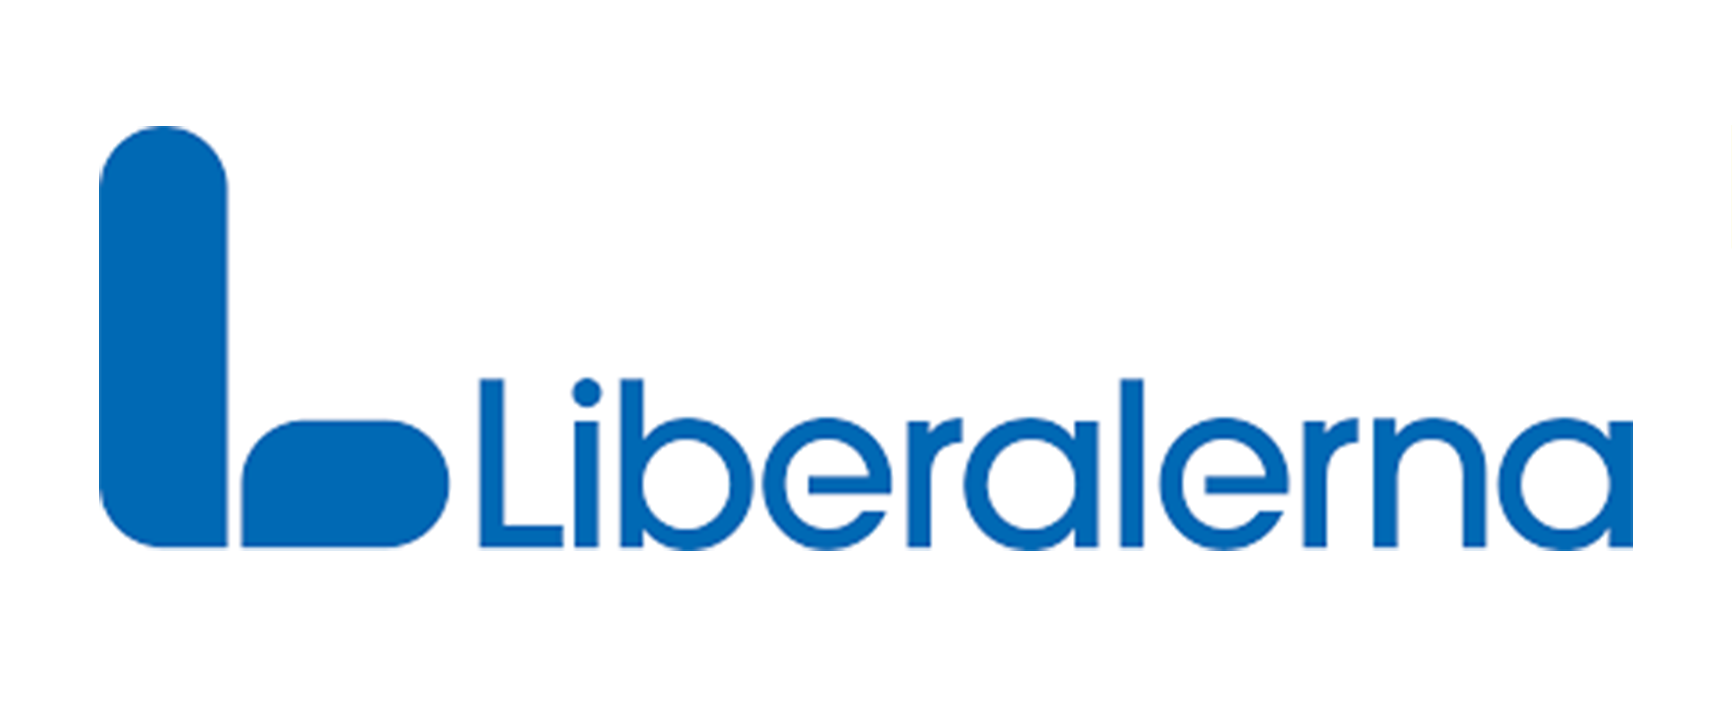 liberalerna